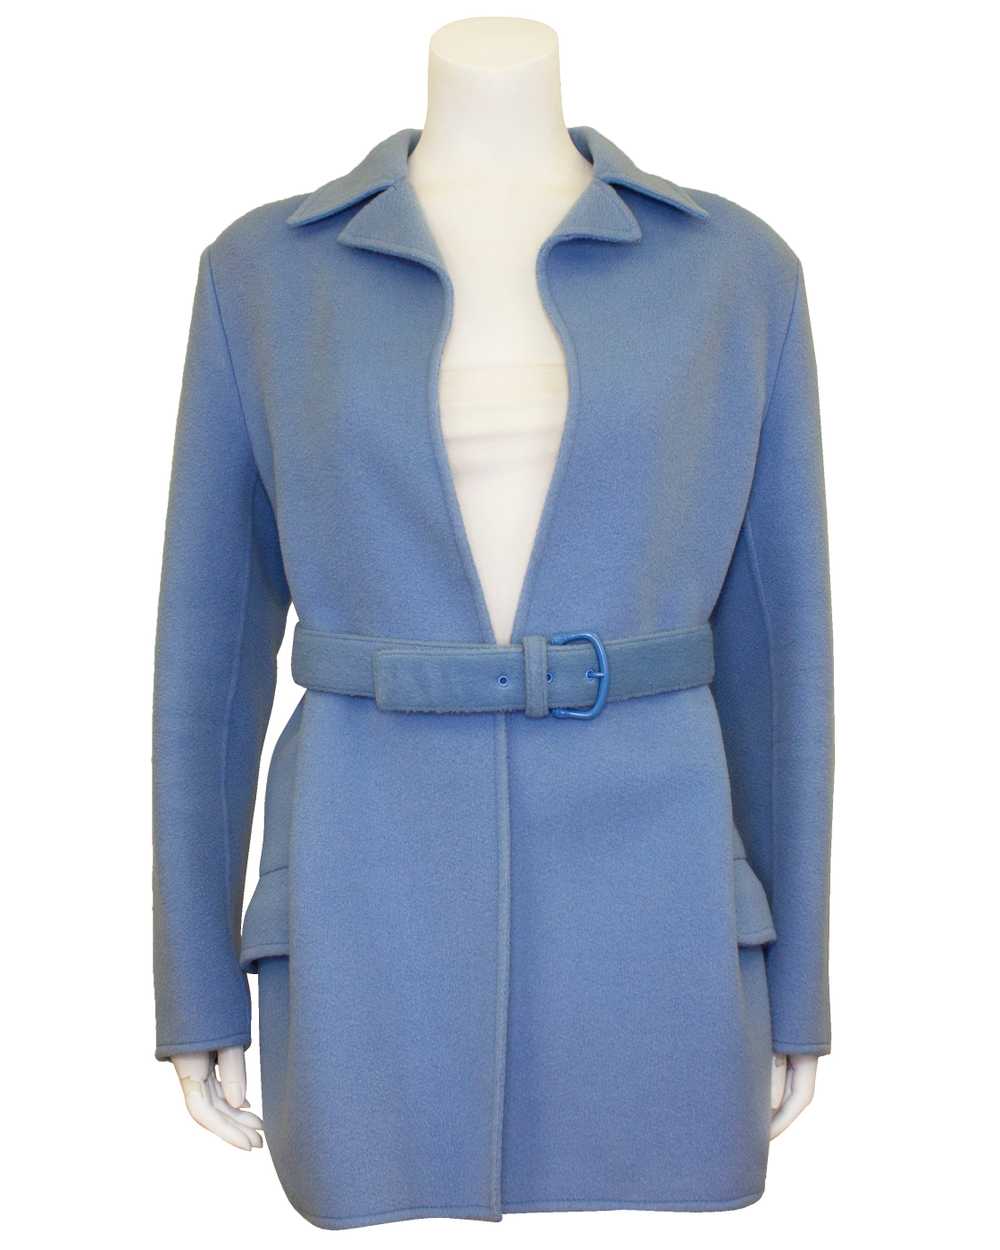 Versace Blue Felted Wool Jacket - image 3